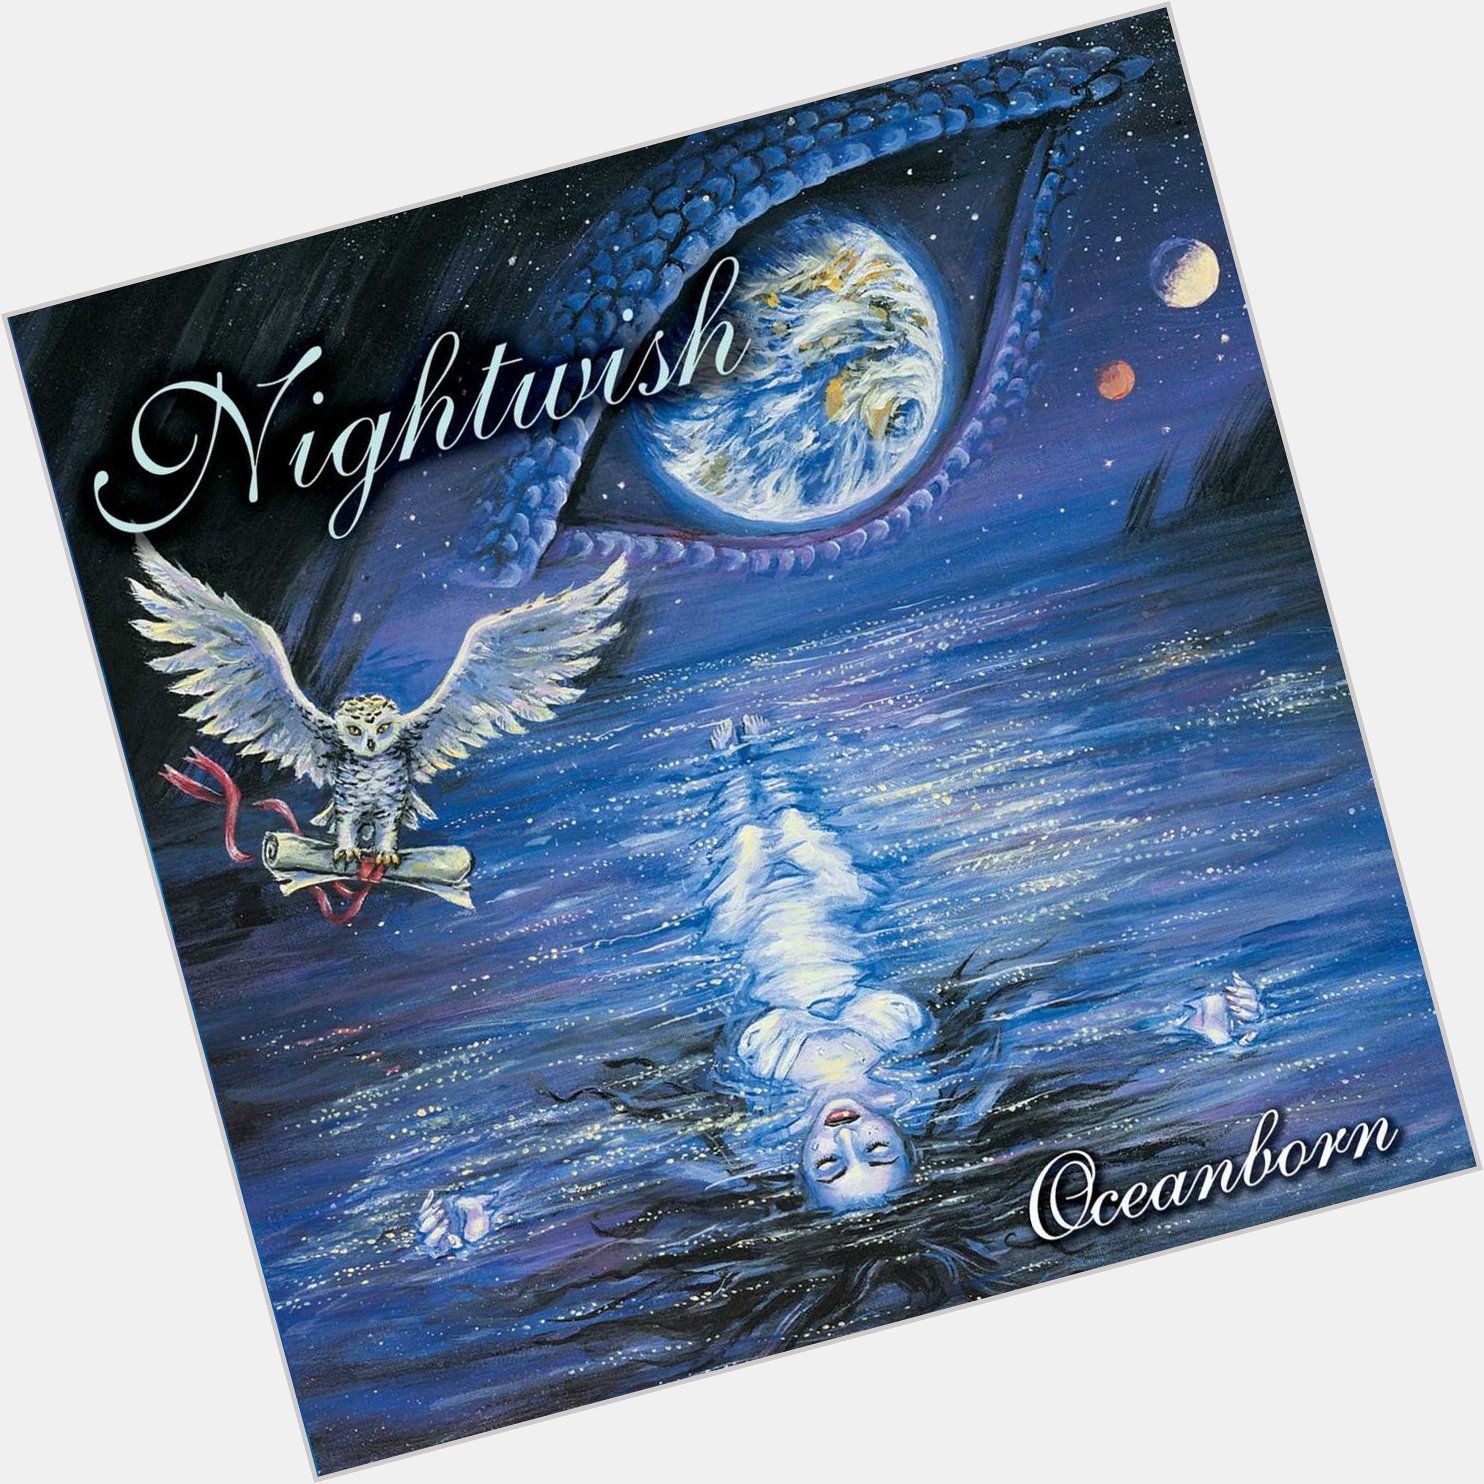  Stargazers
from Oceanborn
by Nightwish

Happy Birthday, Tarja Turunen 